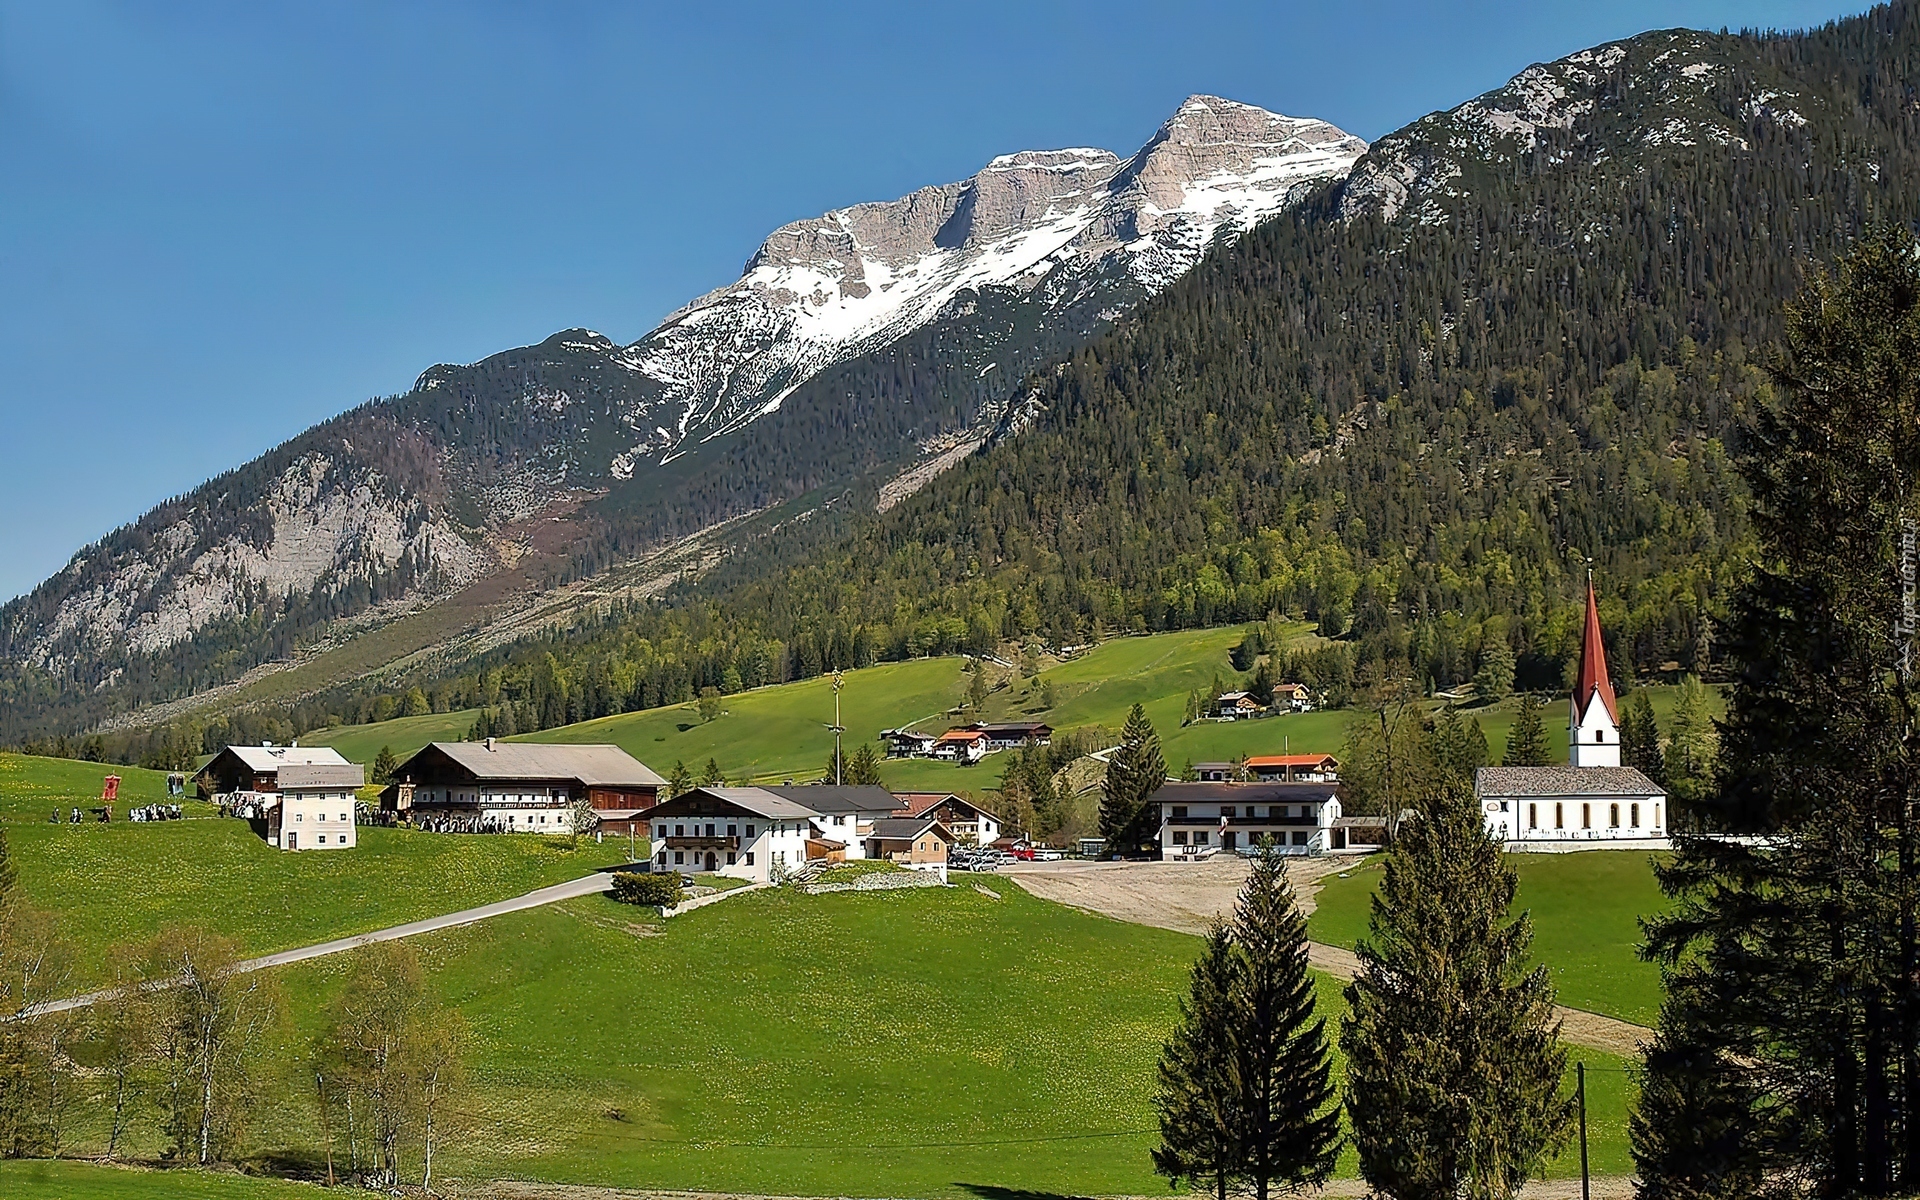 Tyrol, Lasy, Łąki, Dolina, Wioska, Steinberg